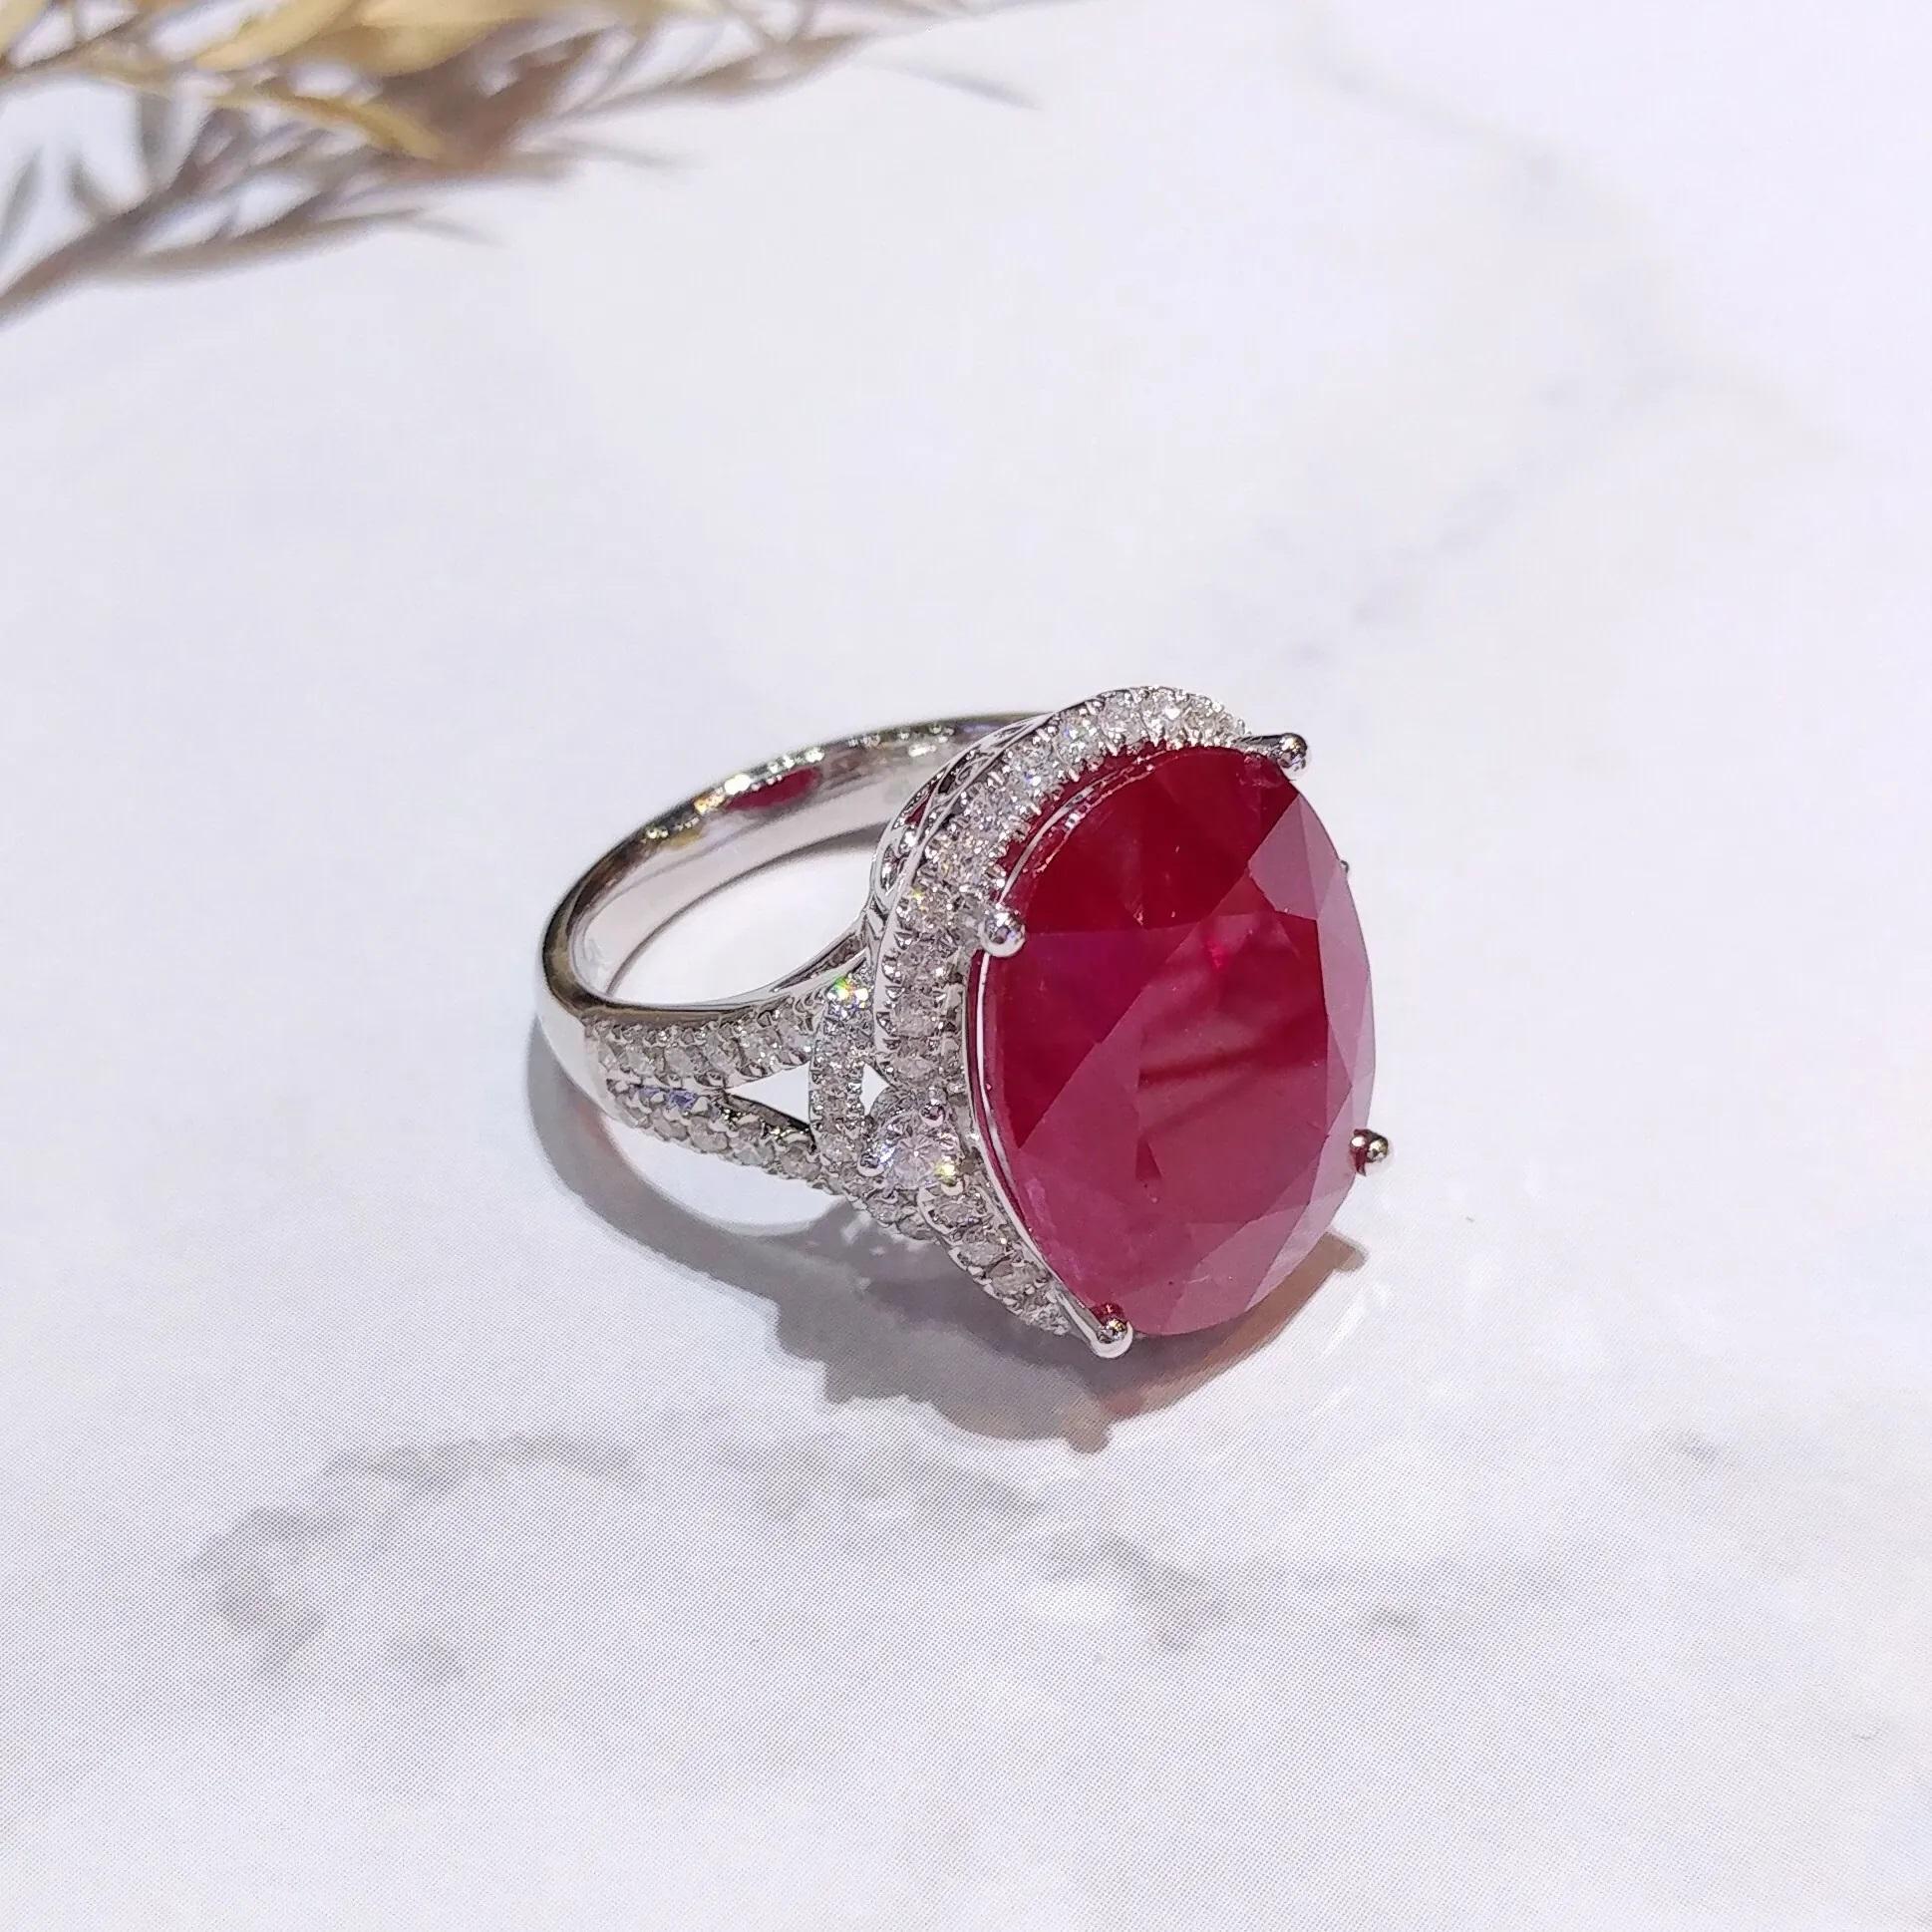 IGI Certified Rare 14.13 Carat Burma Ruby & Diamond Ring in 18K White Gold For Sale 4